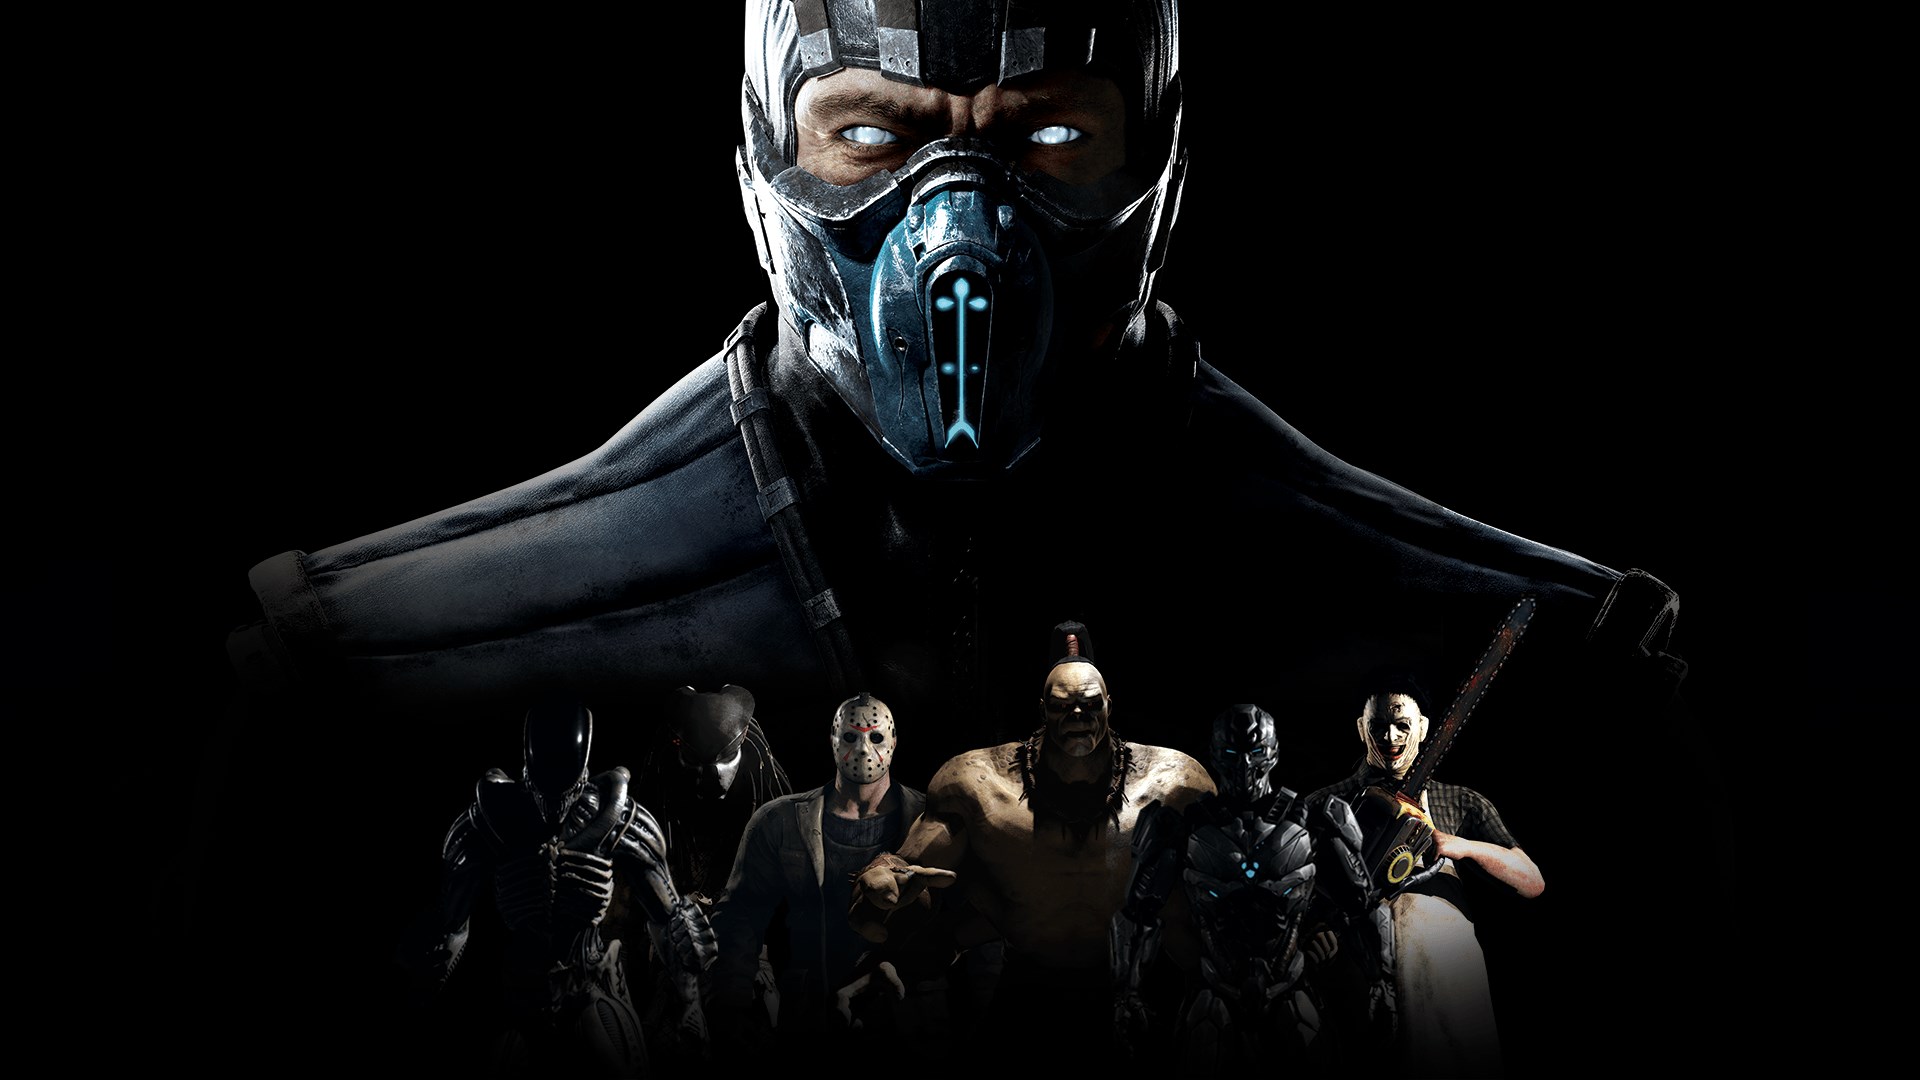 Mortal Kombat -- Complete Edition (Microsoft Xbox 360, 2012) for sale  online